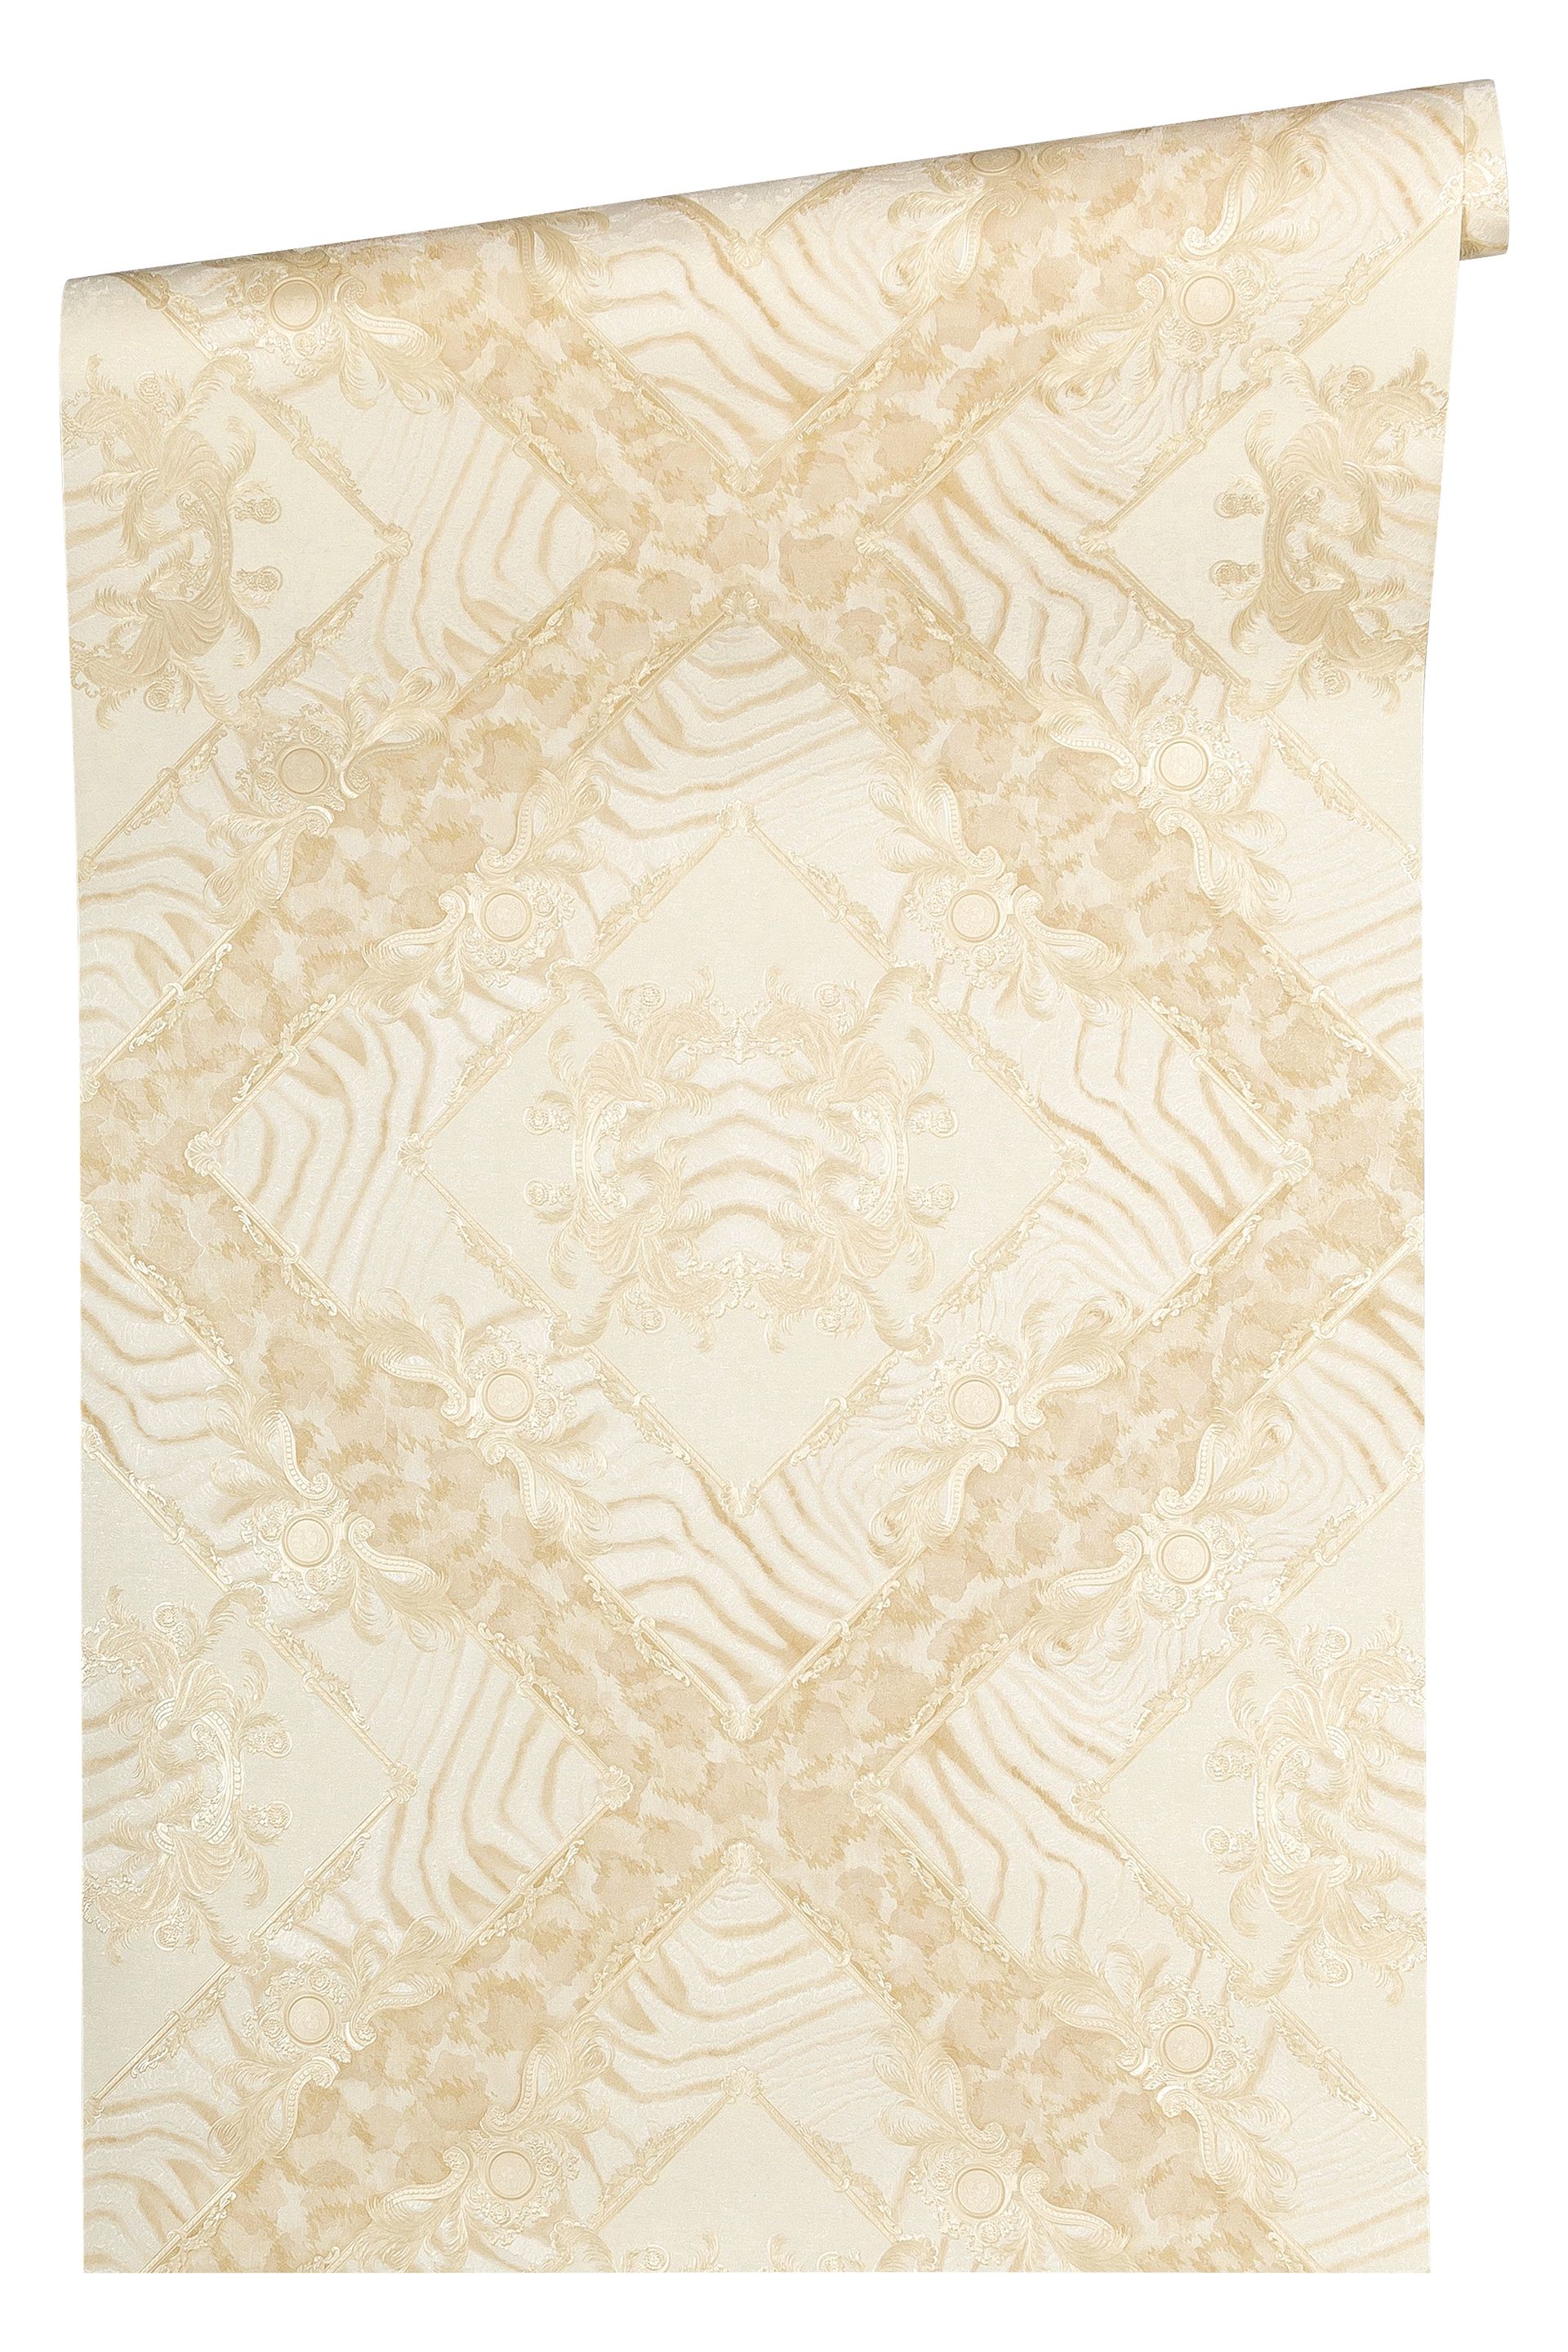 Versace wallpaper Versace 3, Design Tapete, beige, creme 349044